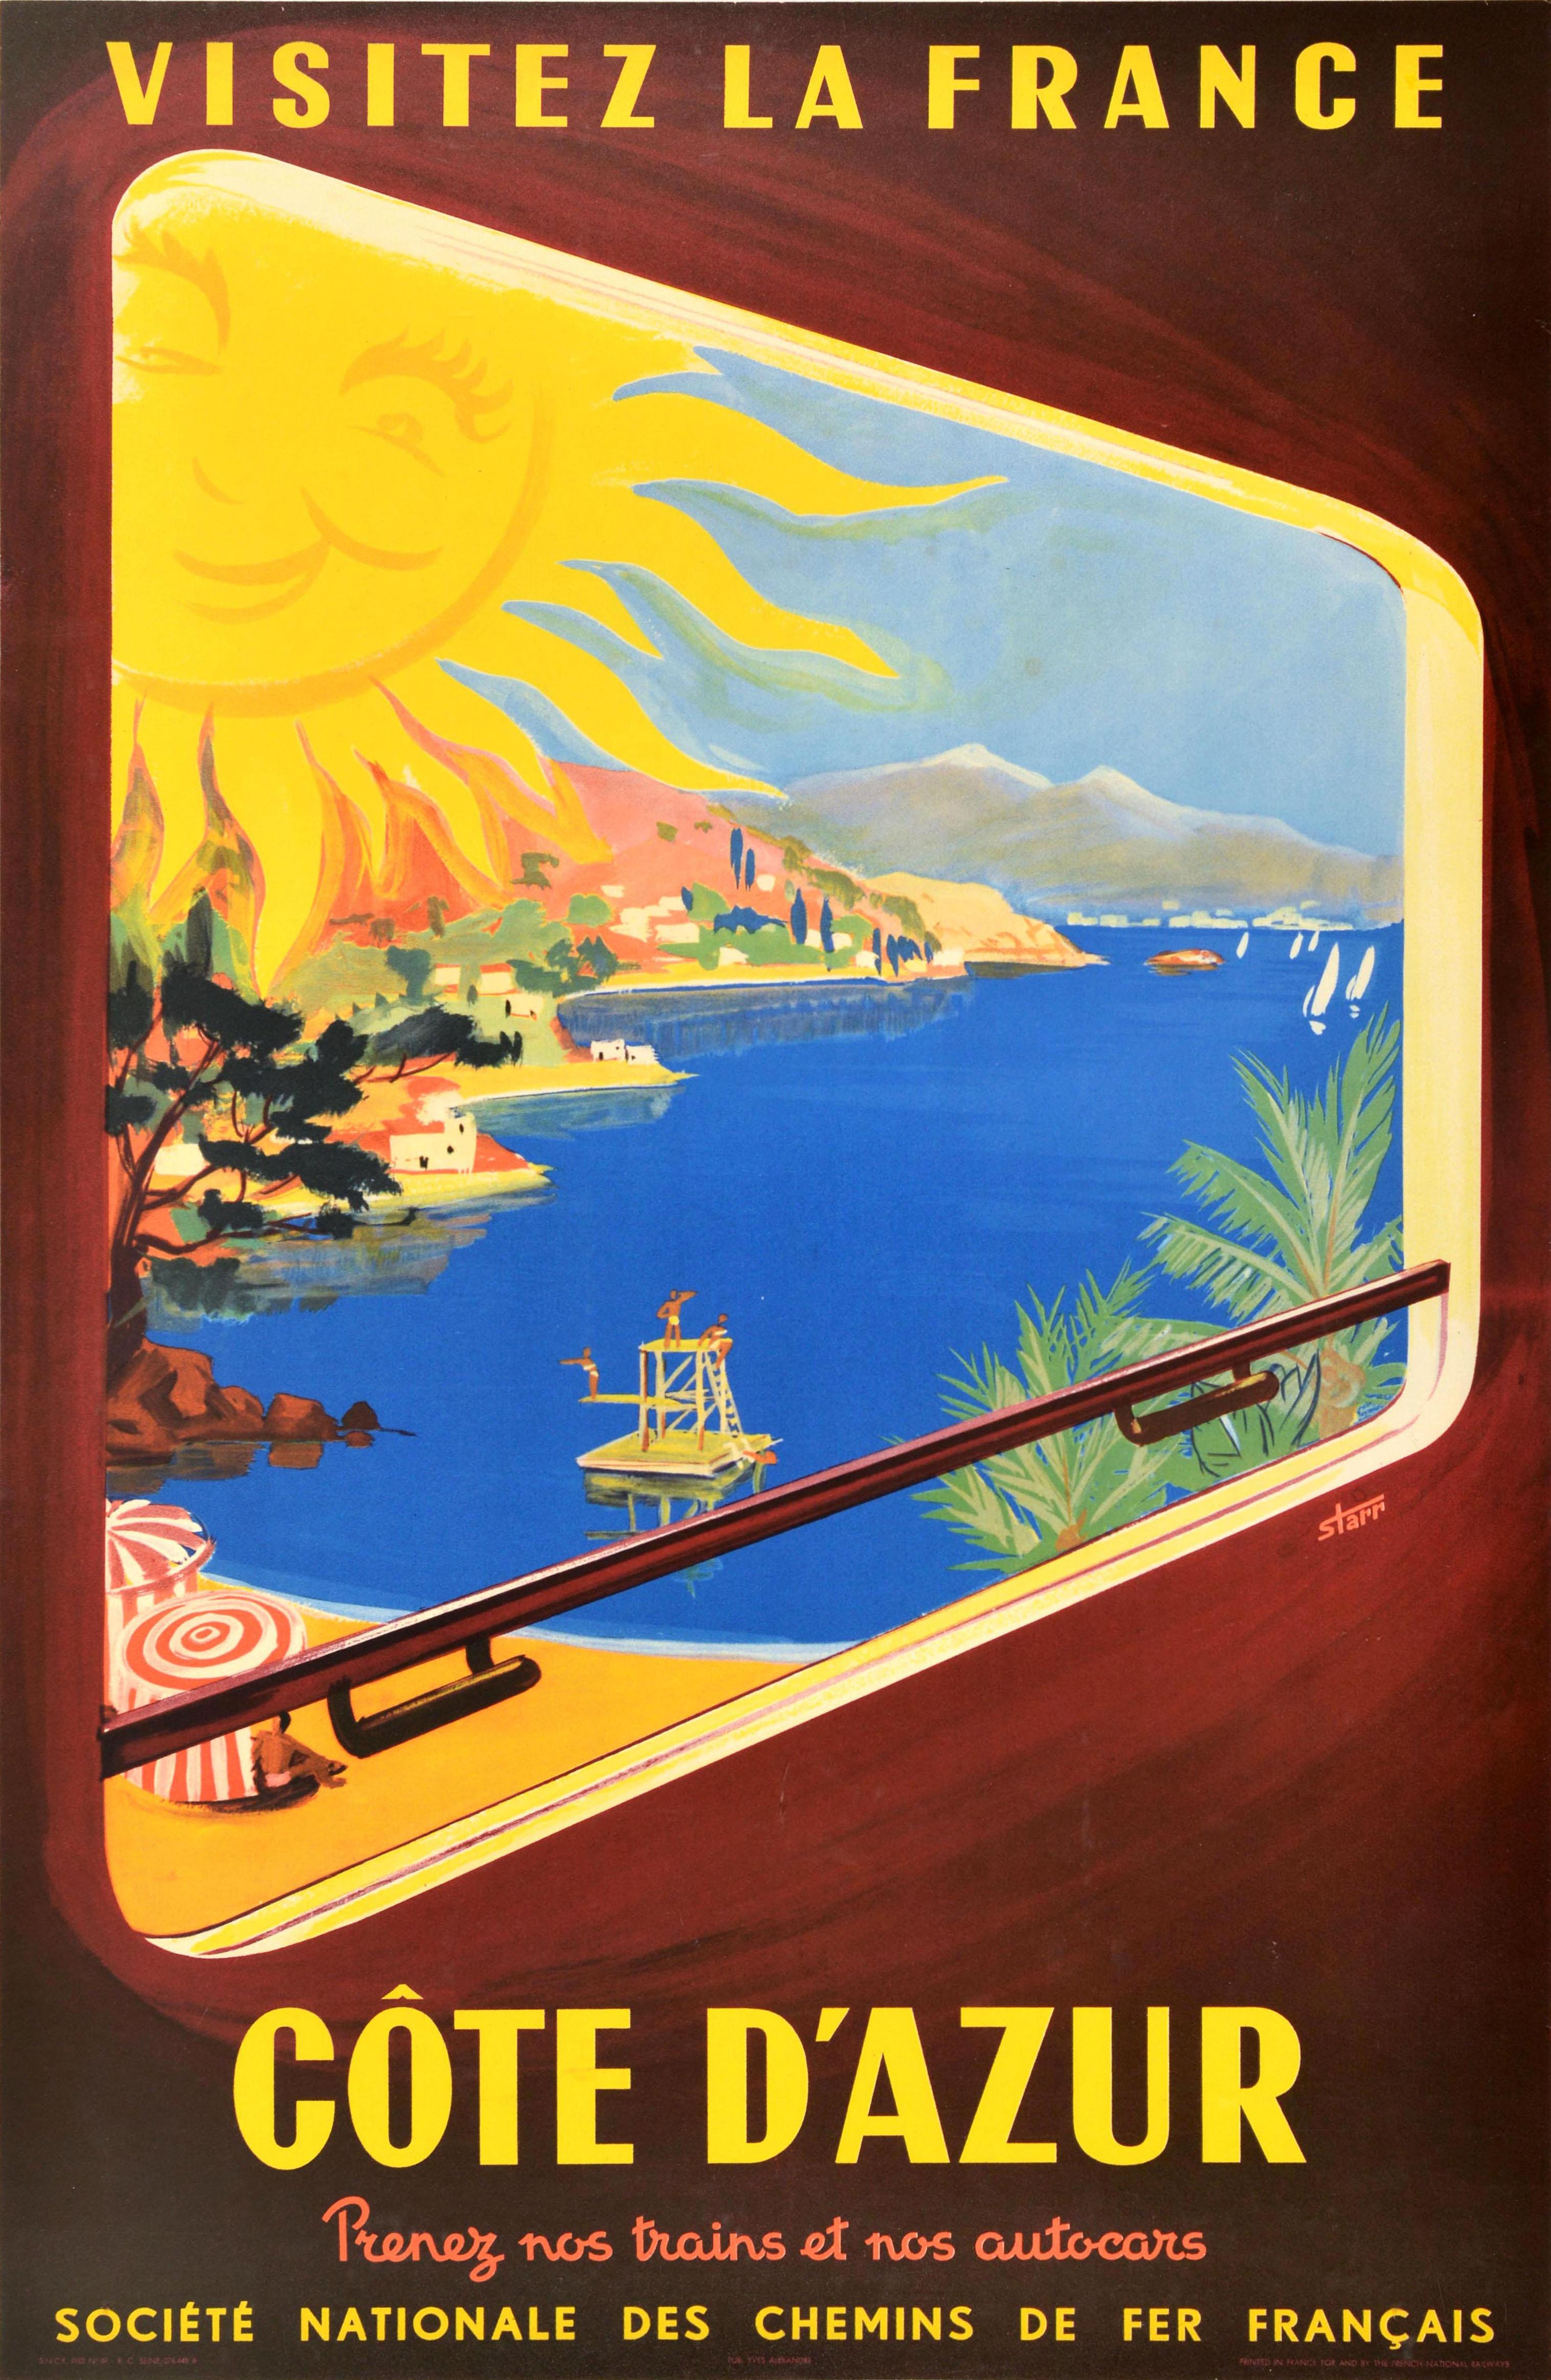 Unknown Print - Original Vintage Travel Poster French Riviera Cote D'Azur SNCF Visit France